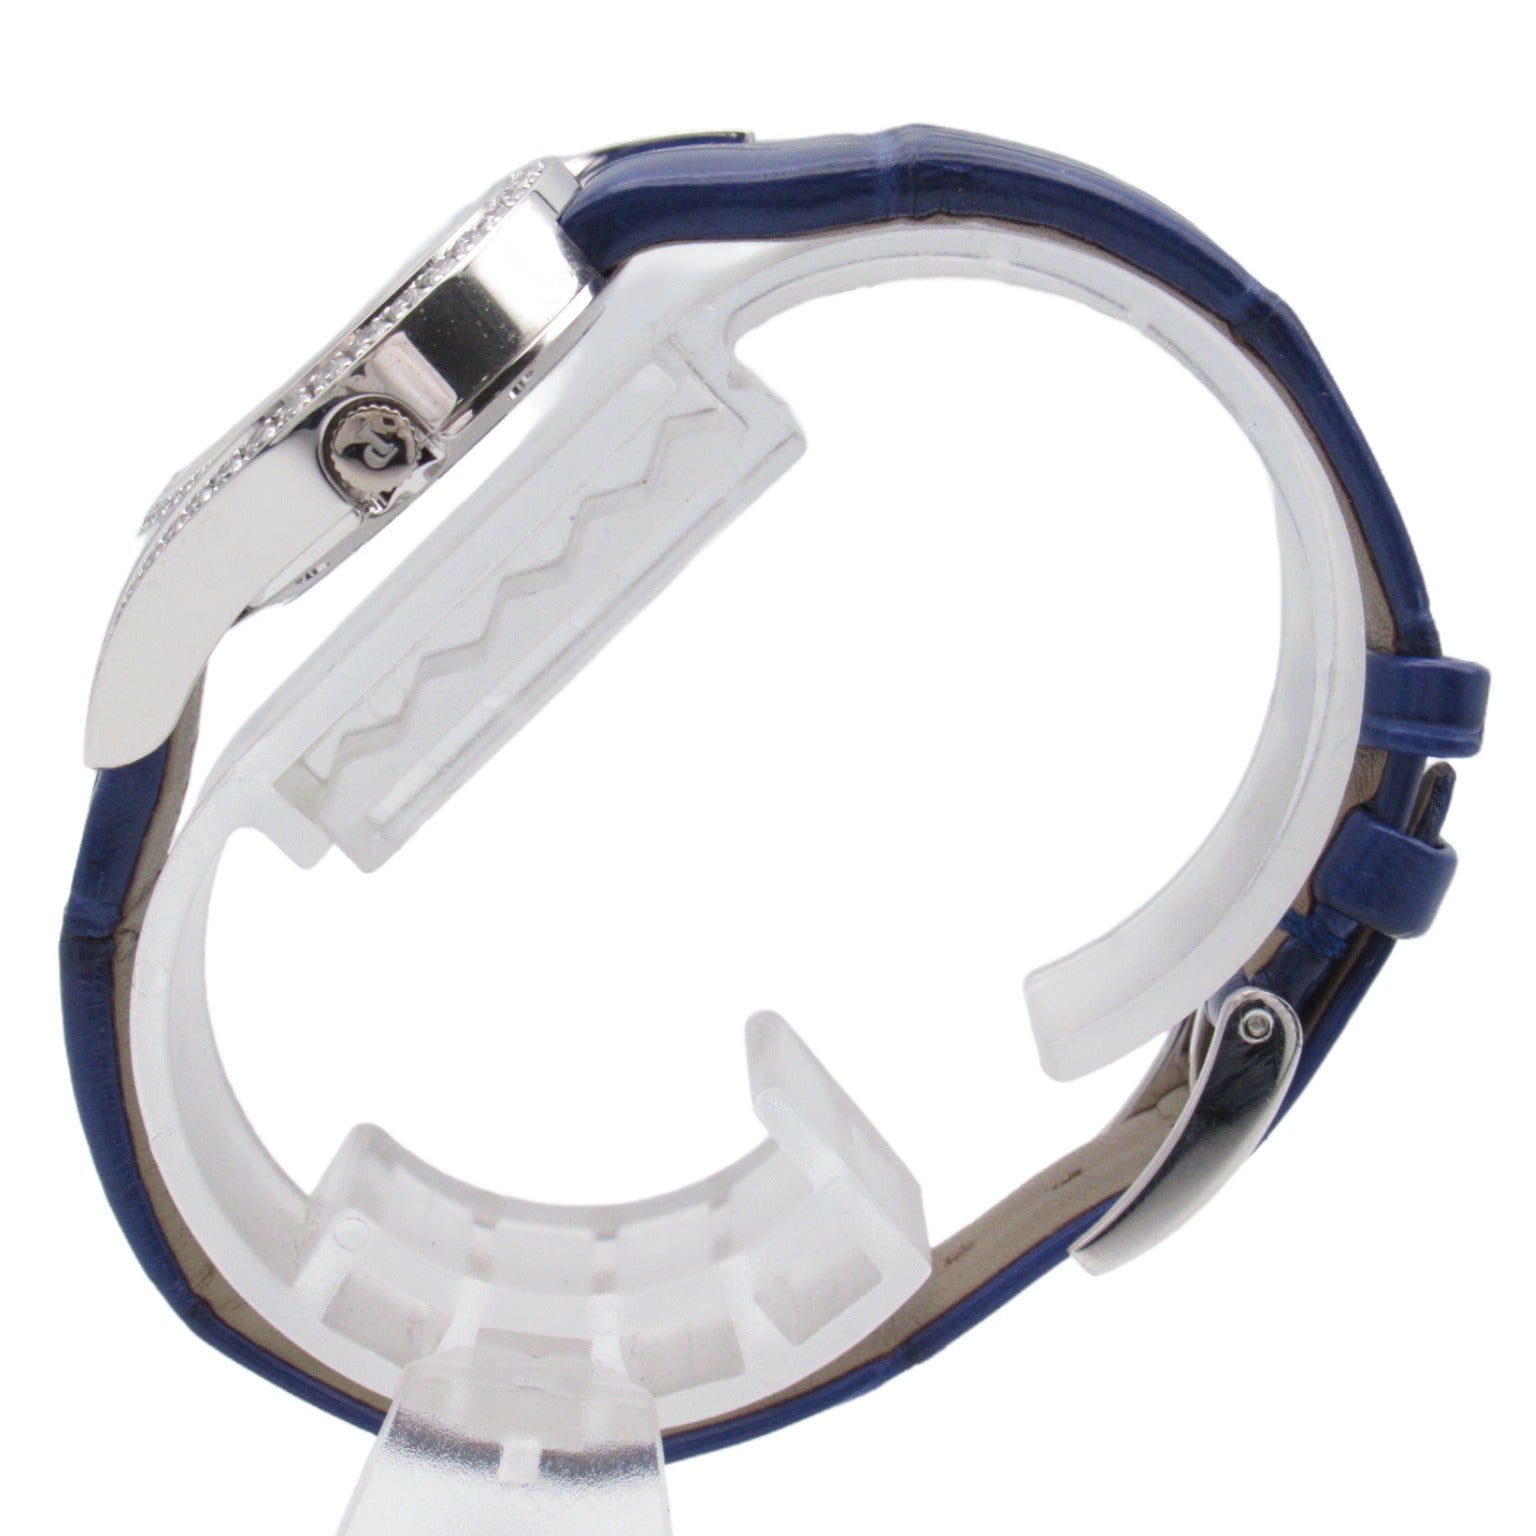 Peugeot PIAGET Luminous Glass  Watch K18WG (White G) Leather Belt  Silver  G0A43150